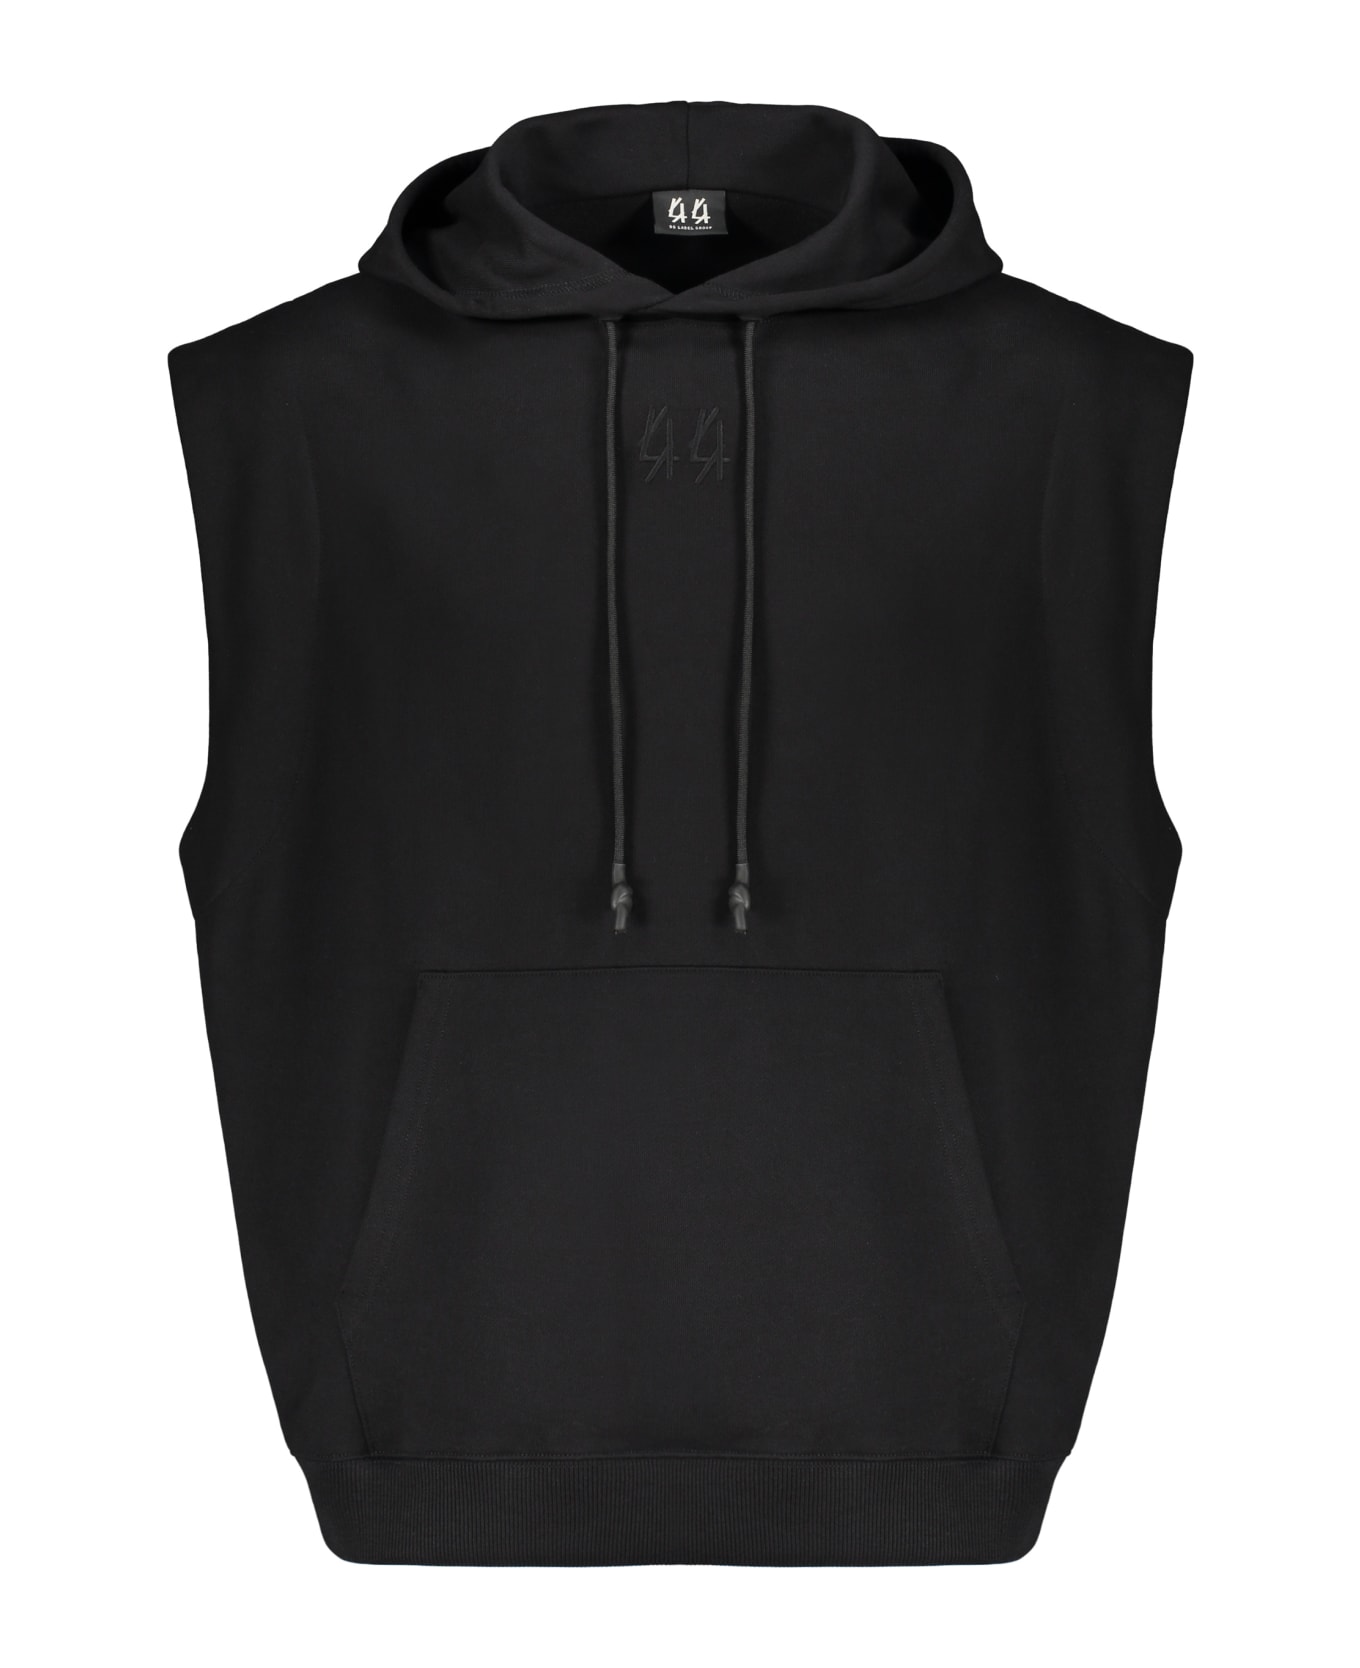 44 Label Group Sleeveless Sweatshirt - black